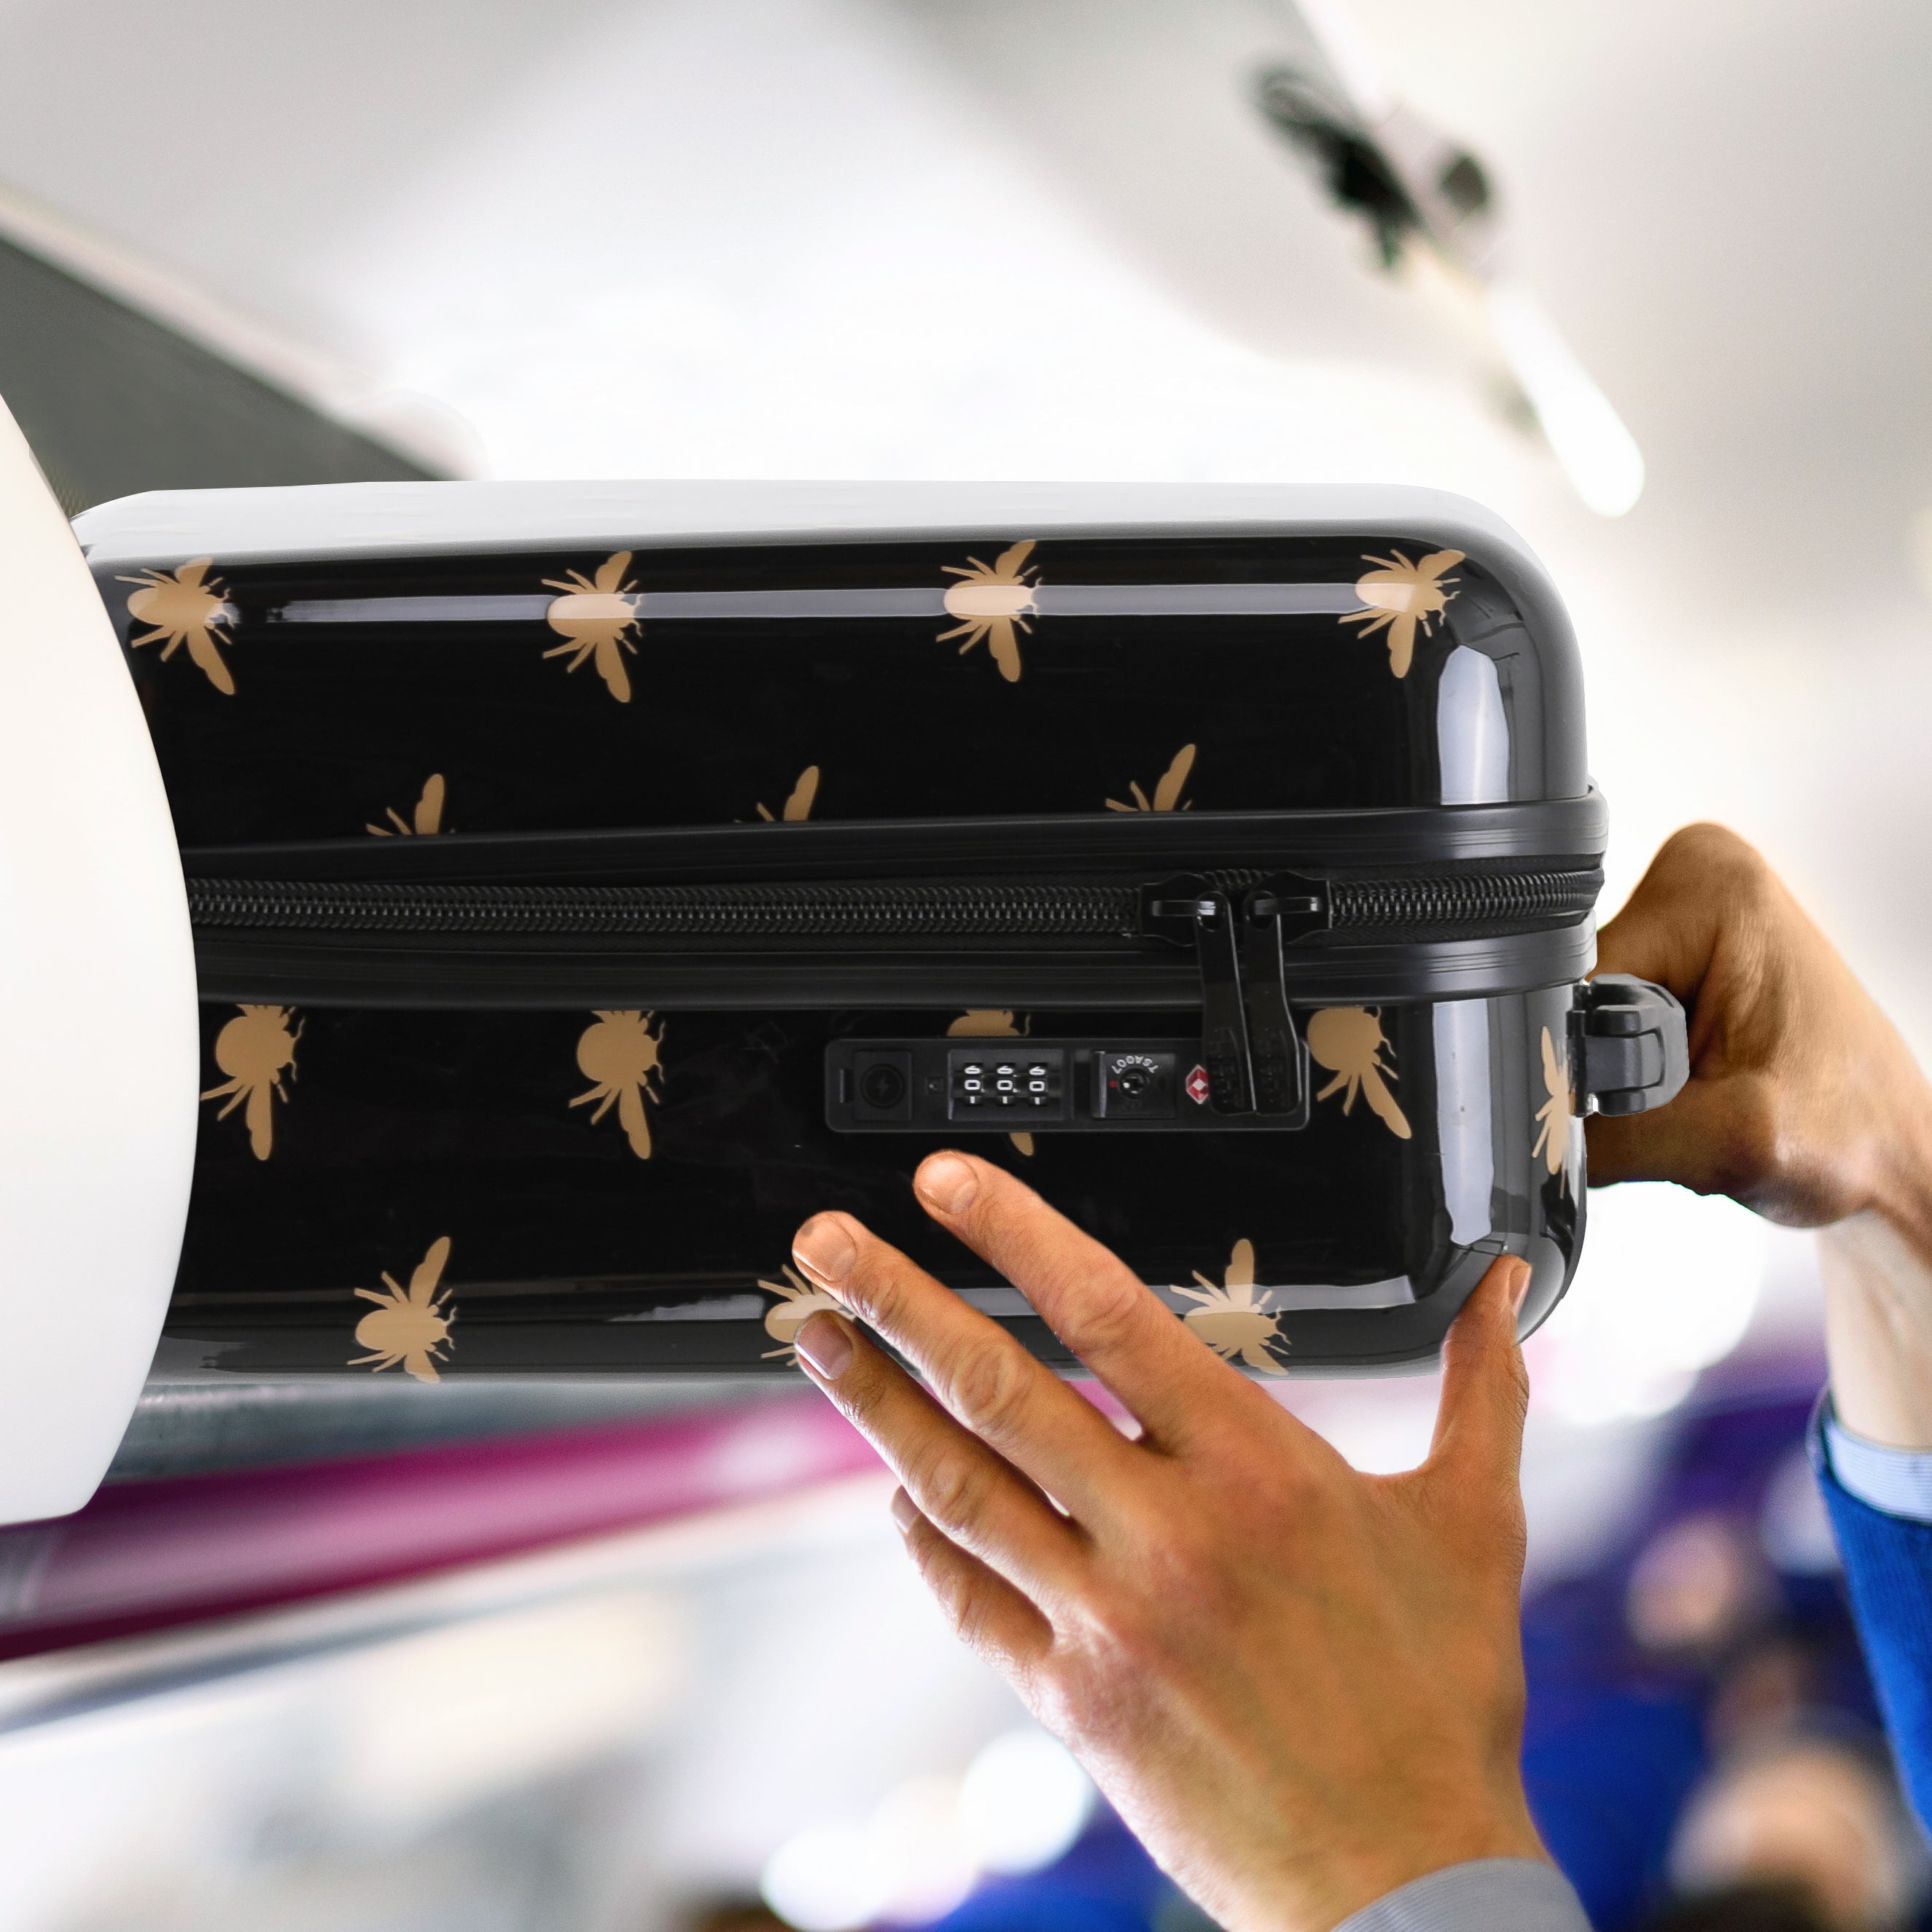 45x36x20cm Hard Case Printed Cabin Hand Luggage Travel Cabin Bag Easyjet BA TUI